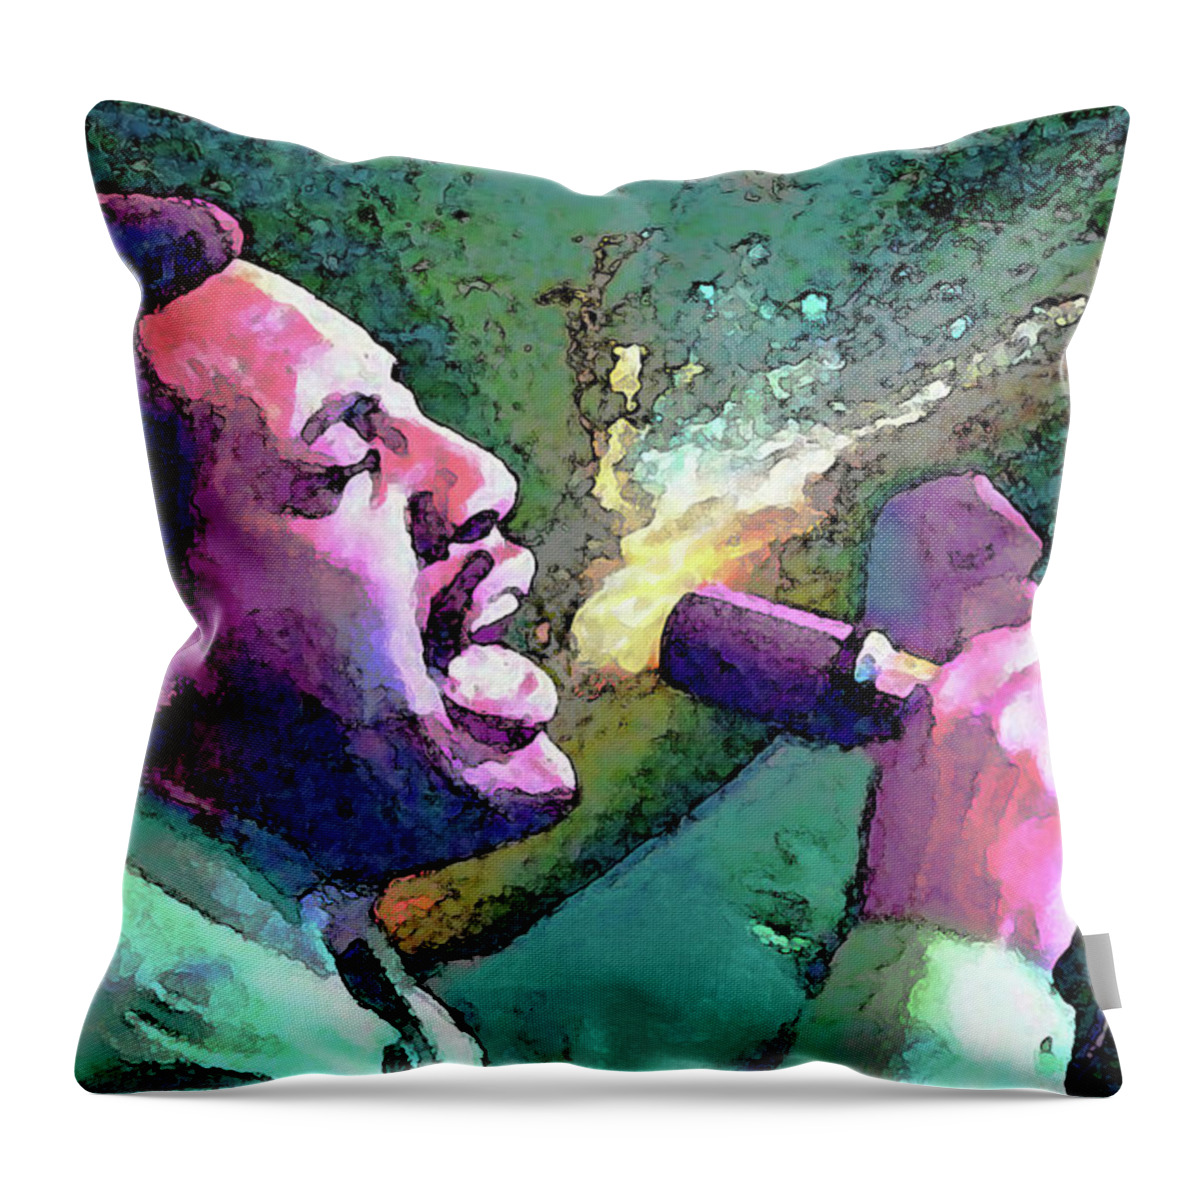 Otis Redding Throw Pillow featuring the painting Otis Redding by John Travisano